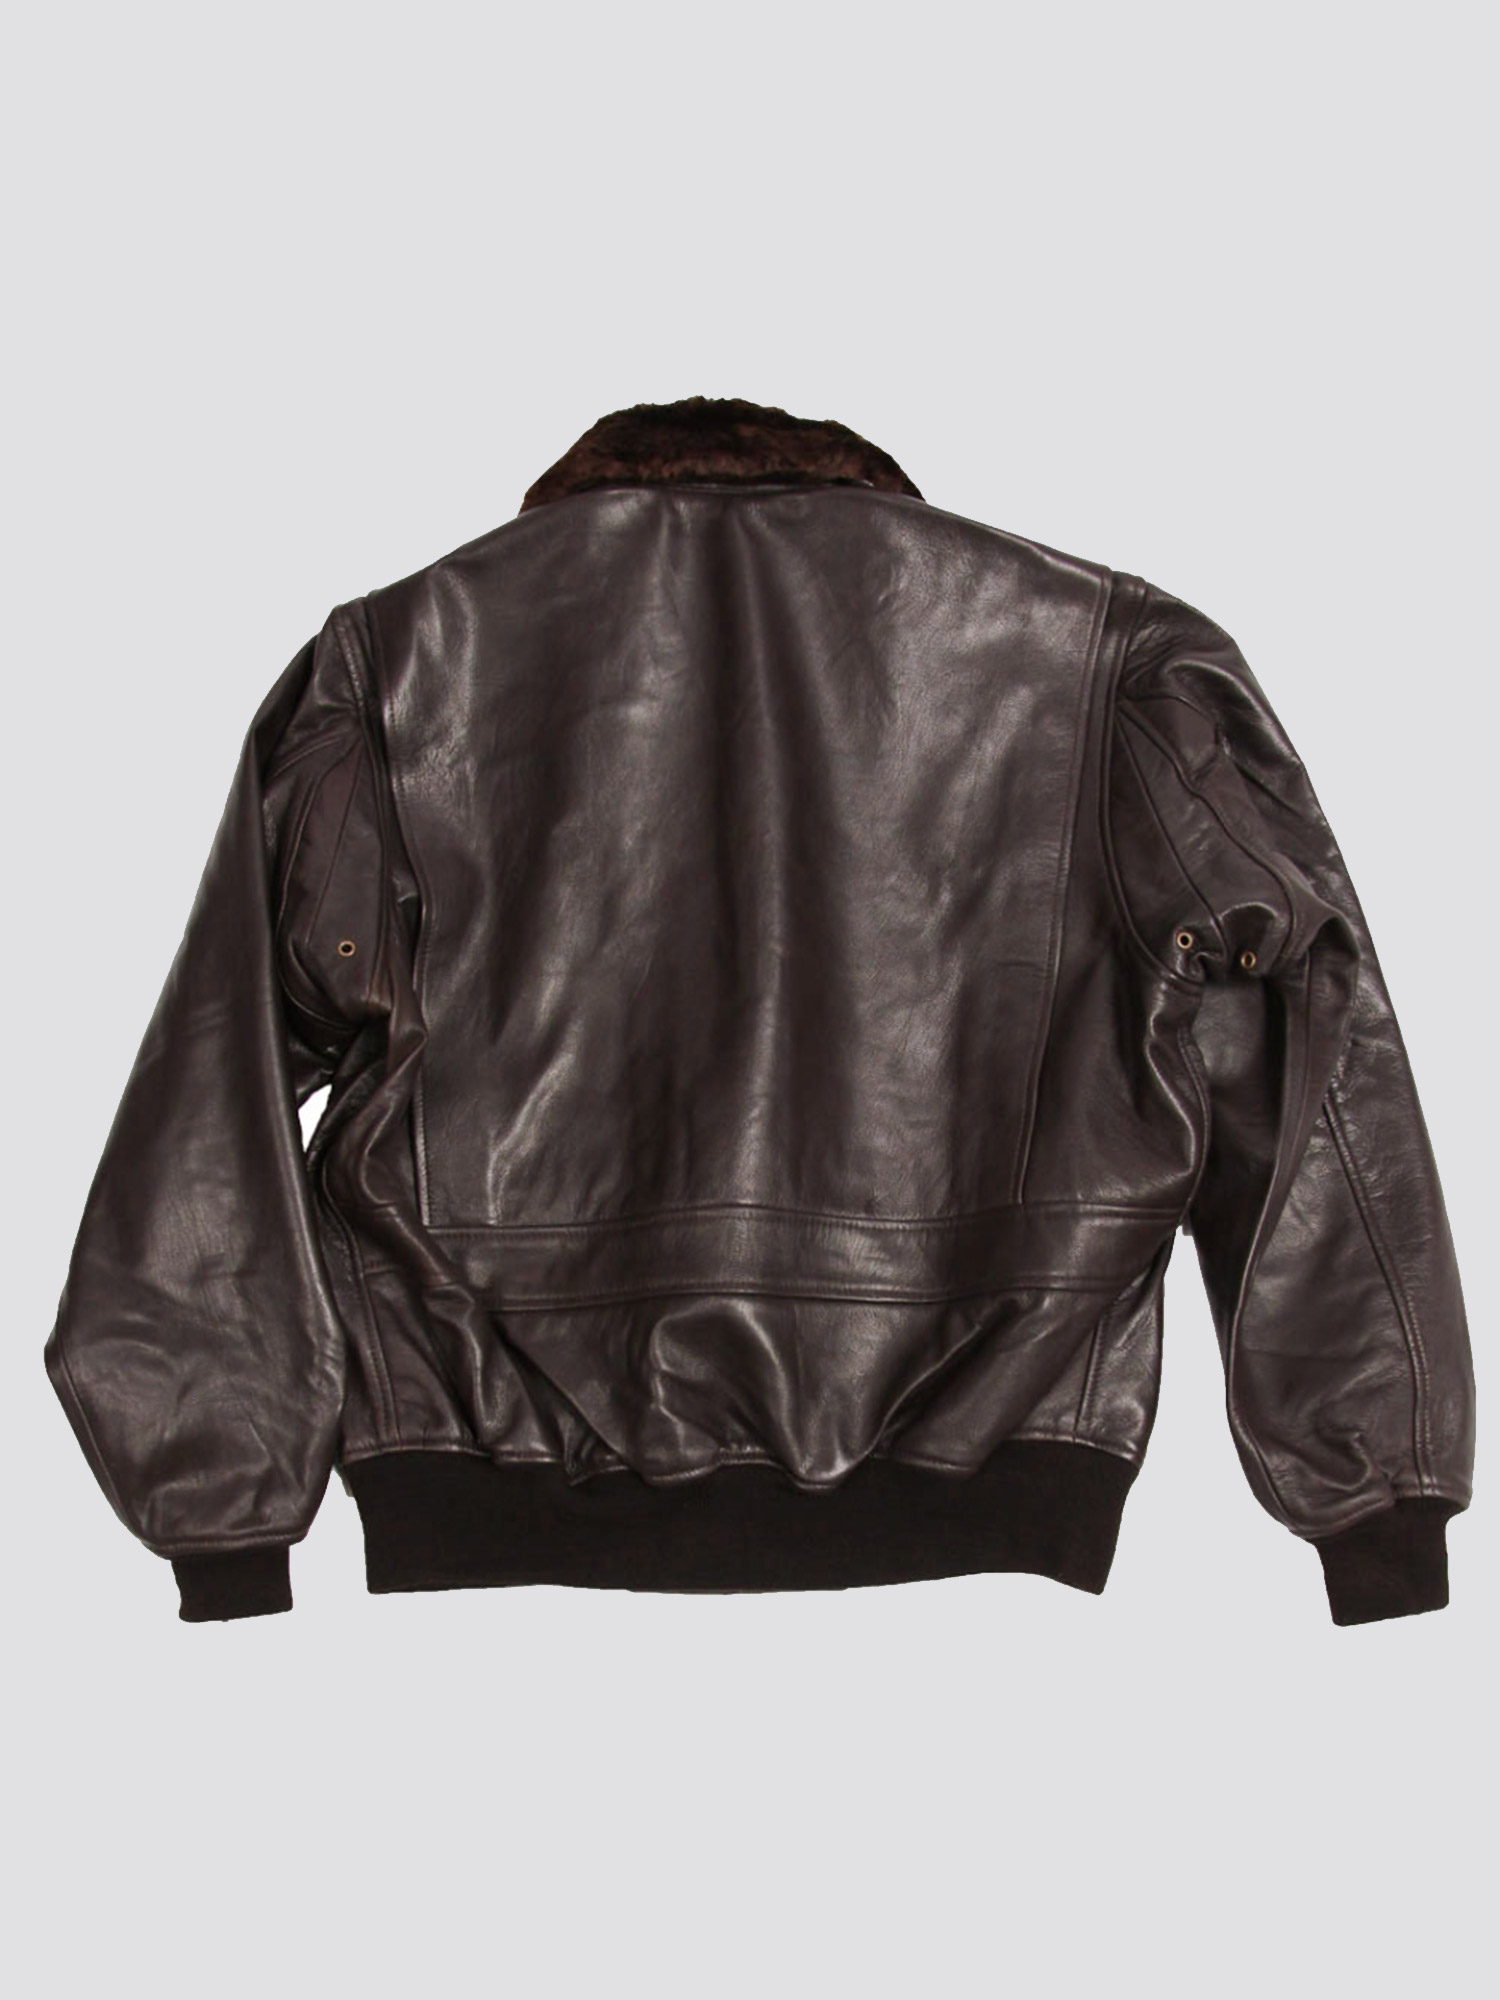 G-1 Aplha fashion Leather Jacket - RockStar Jacket